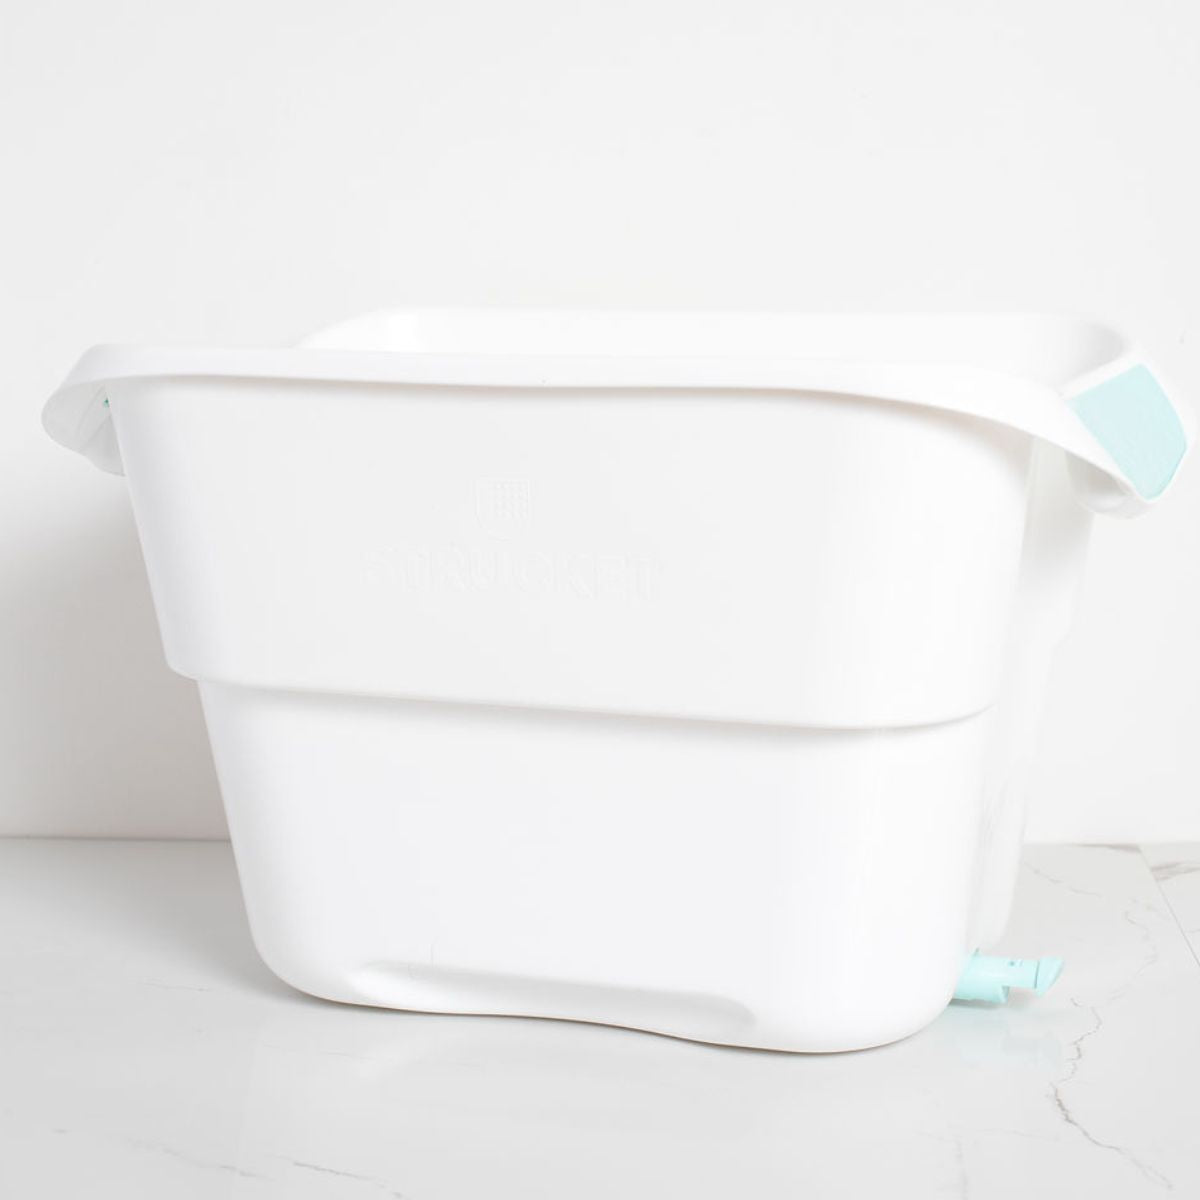 Strucket USA: Laundry Soaking Bucket